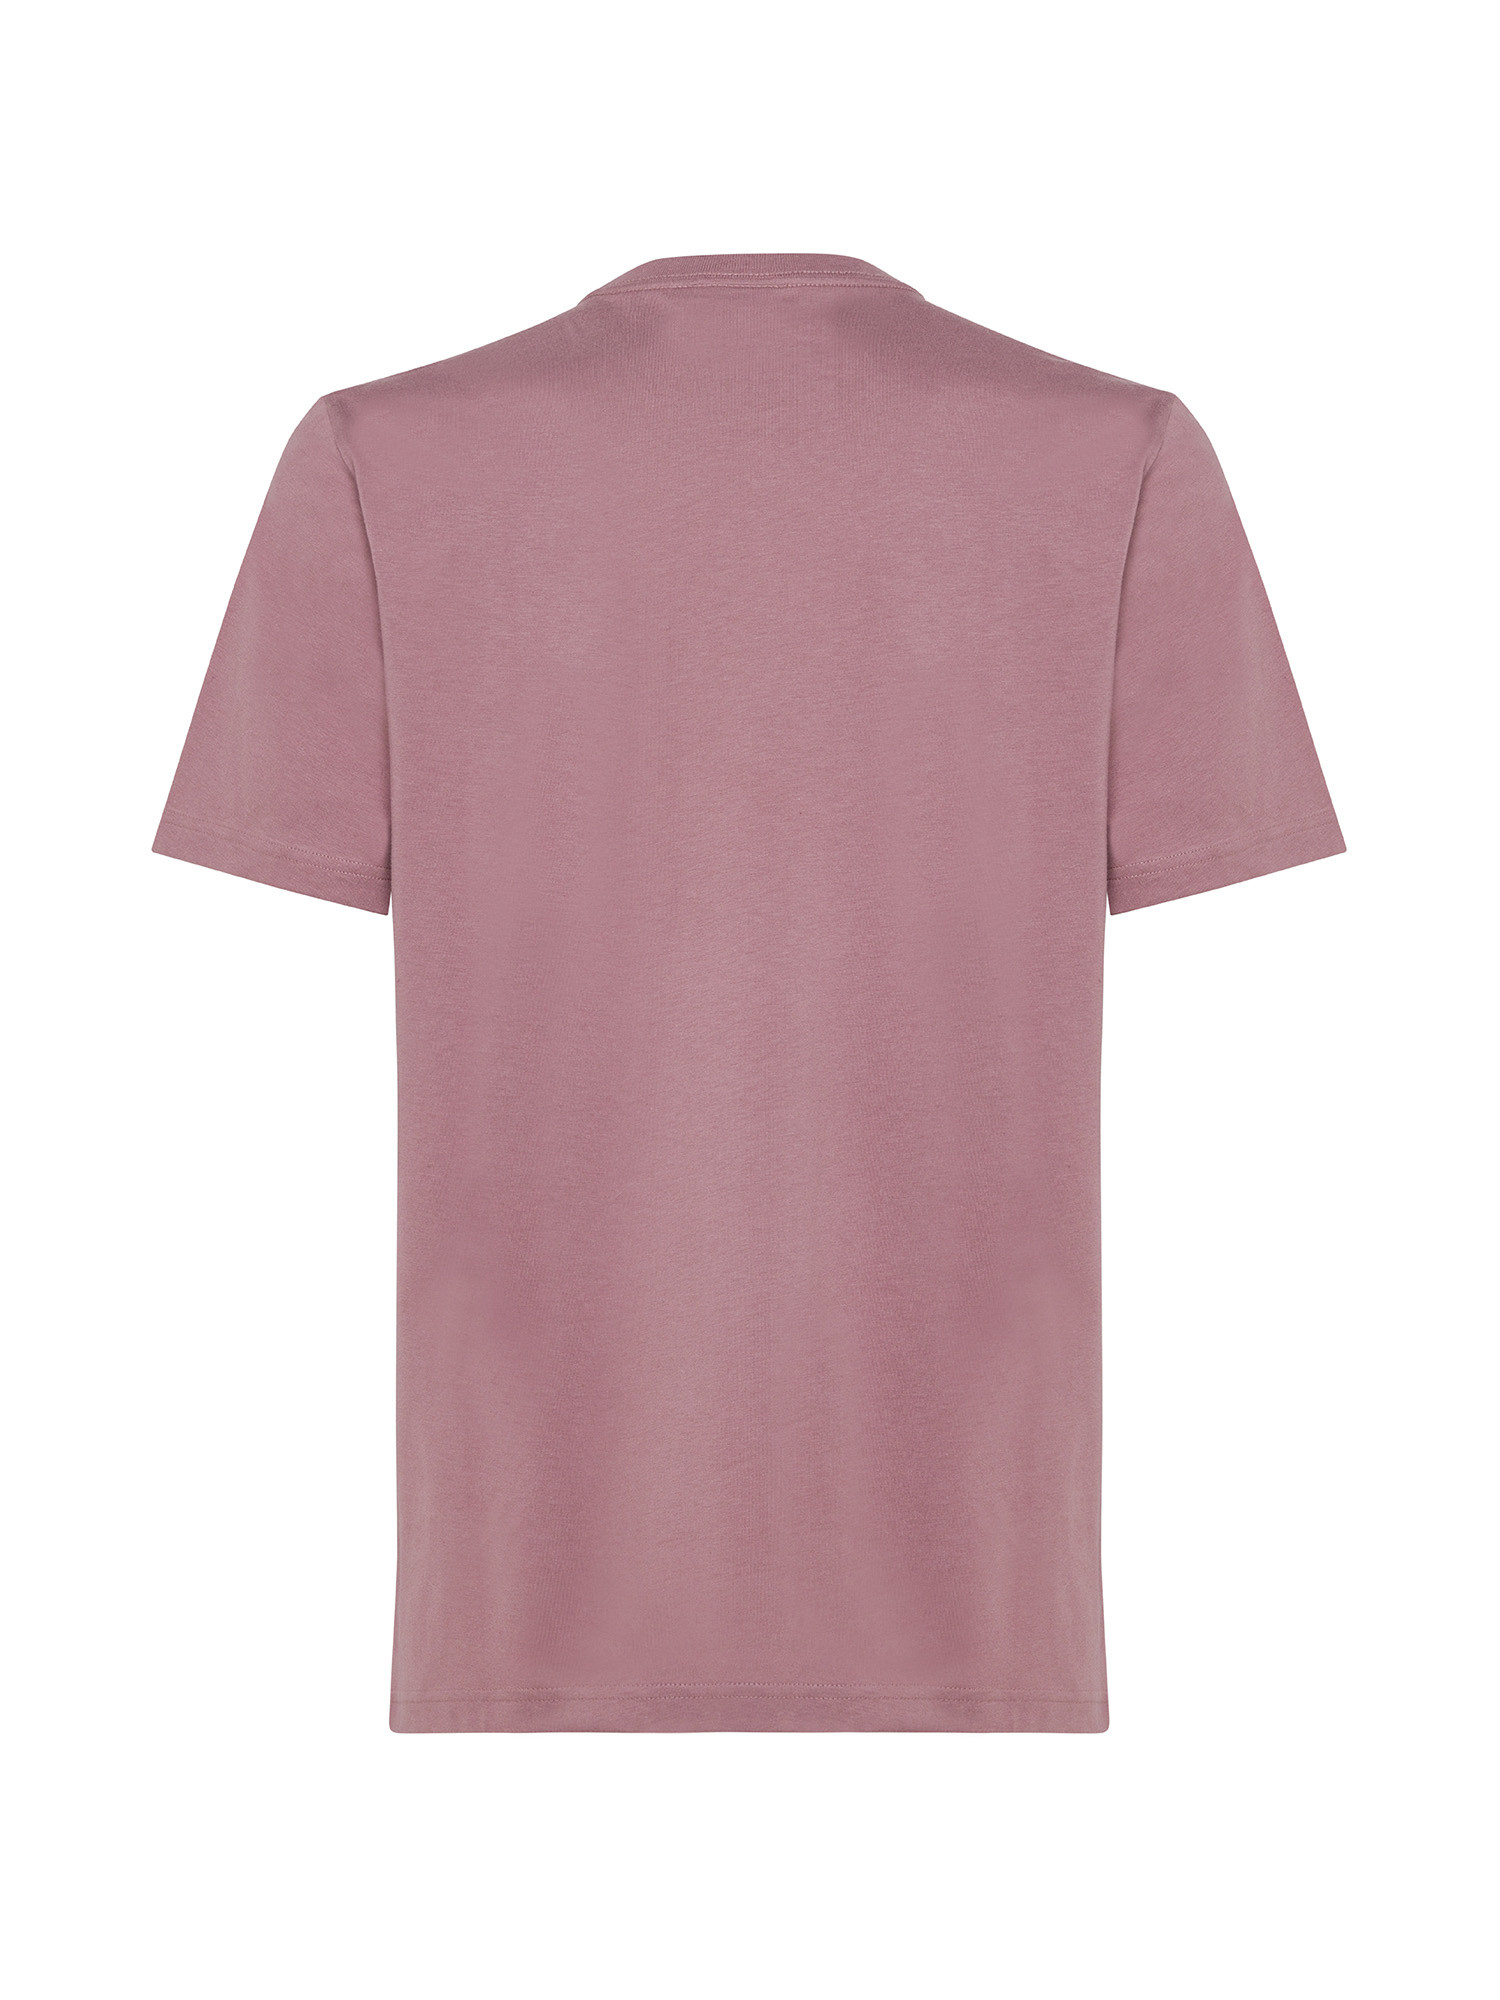 Adidas - T-shirt girocollo con logo, Rosa antico, large image number 1